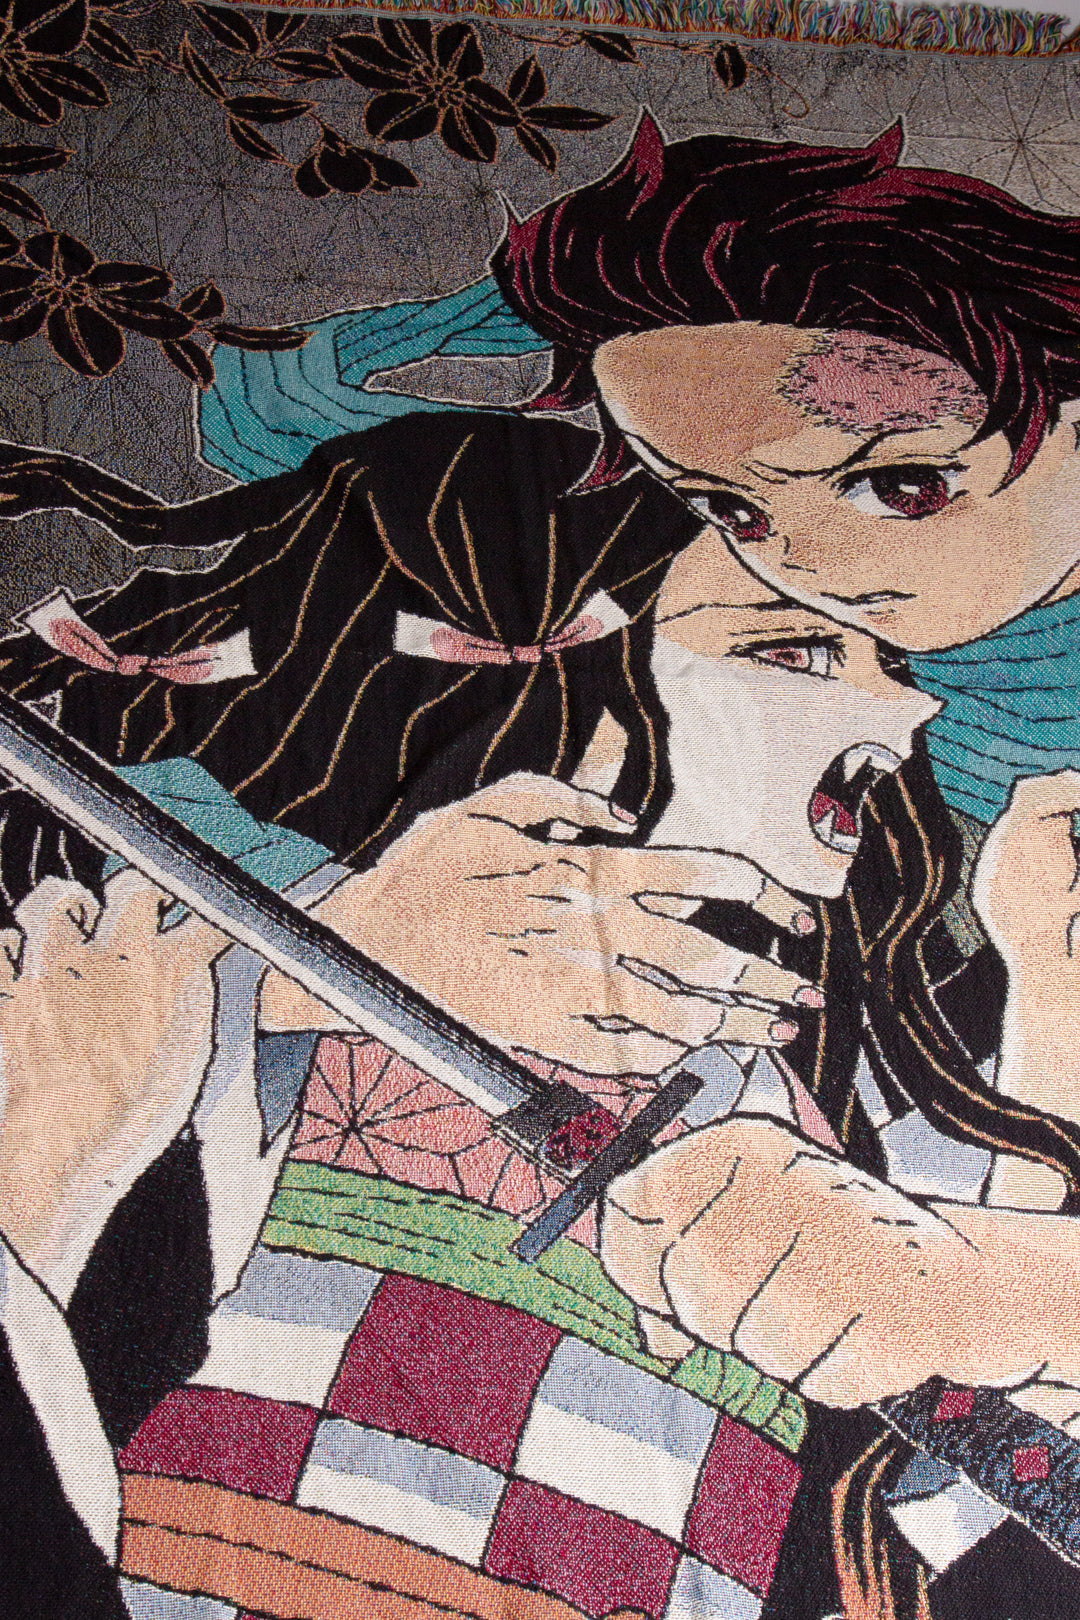 Demon Slayer: Kimetsu no Yaiba Tanjiro & Nezuko Tapestry Blanket